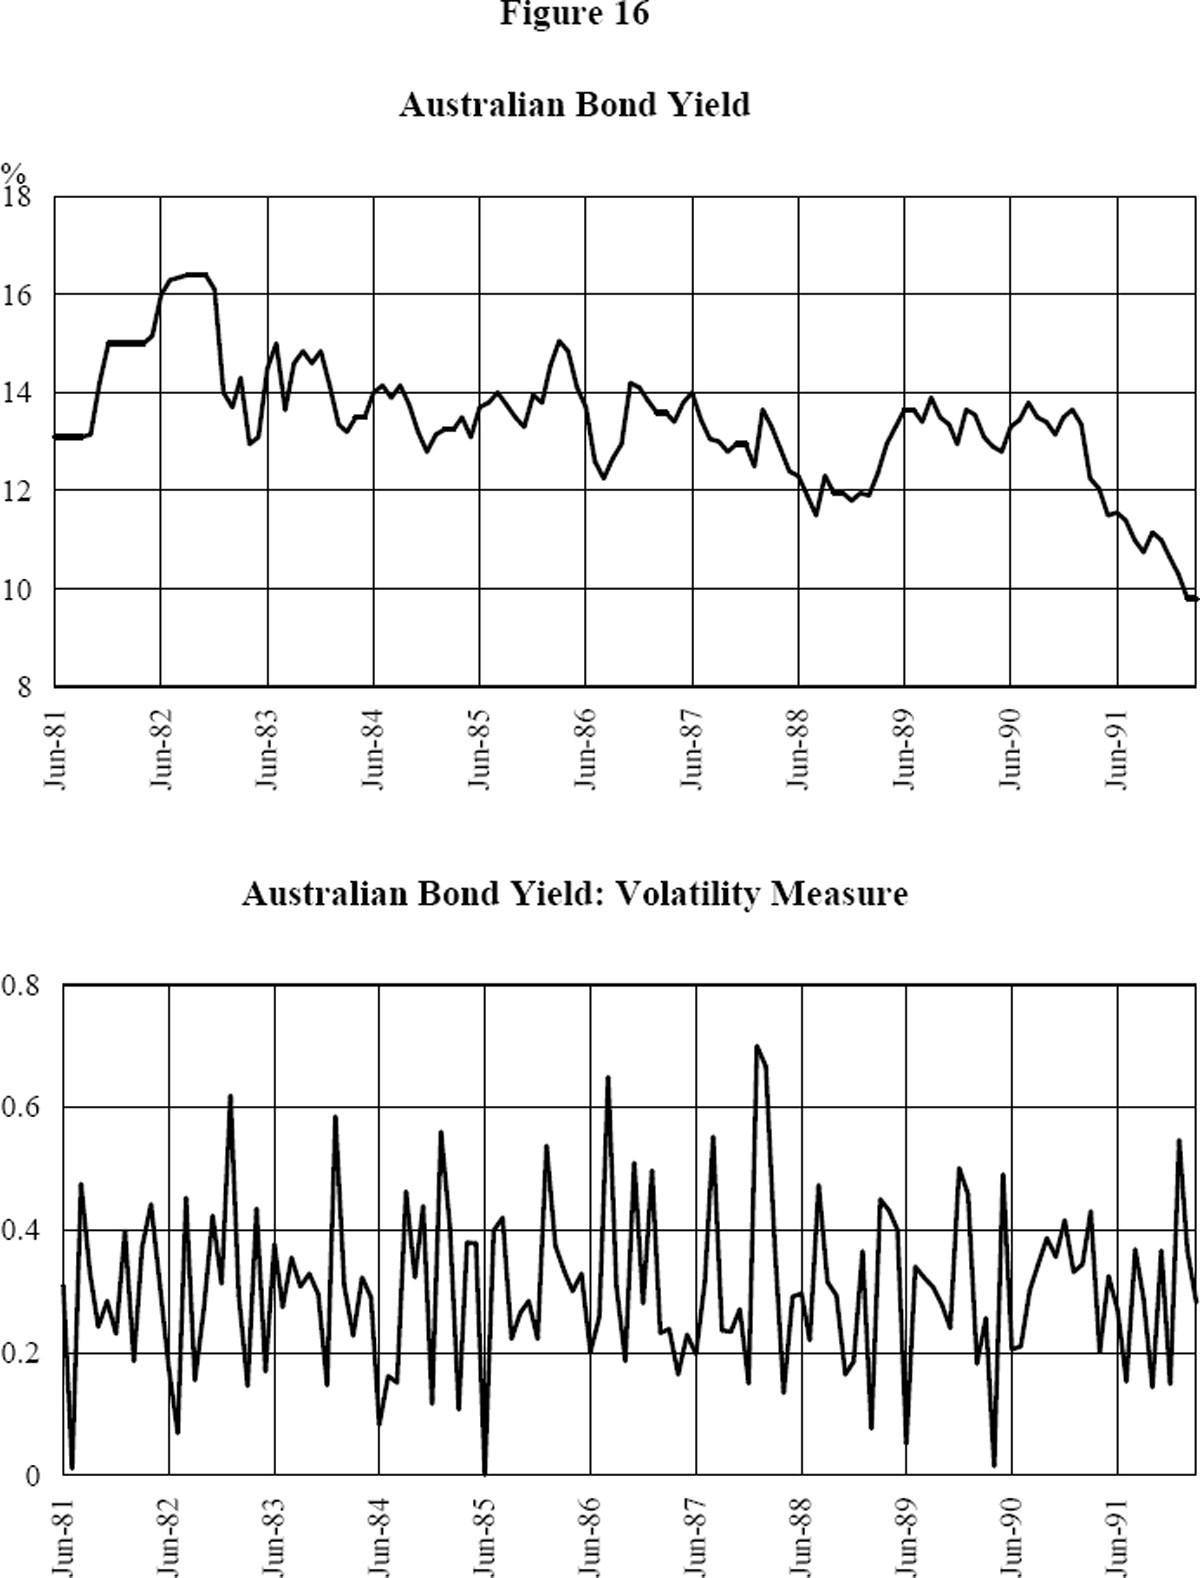 Figure 16: Australian Bond Yield and Volatility Measure